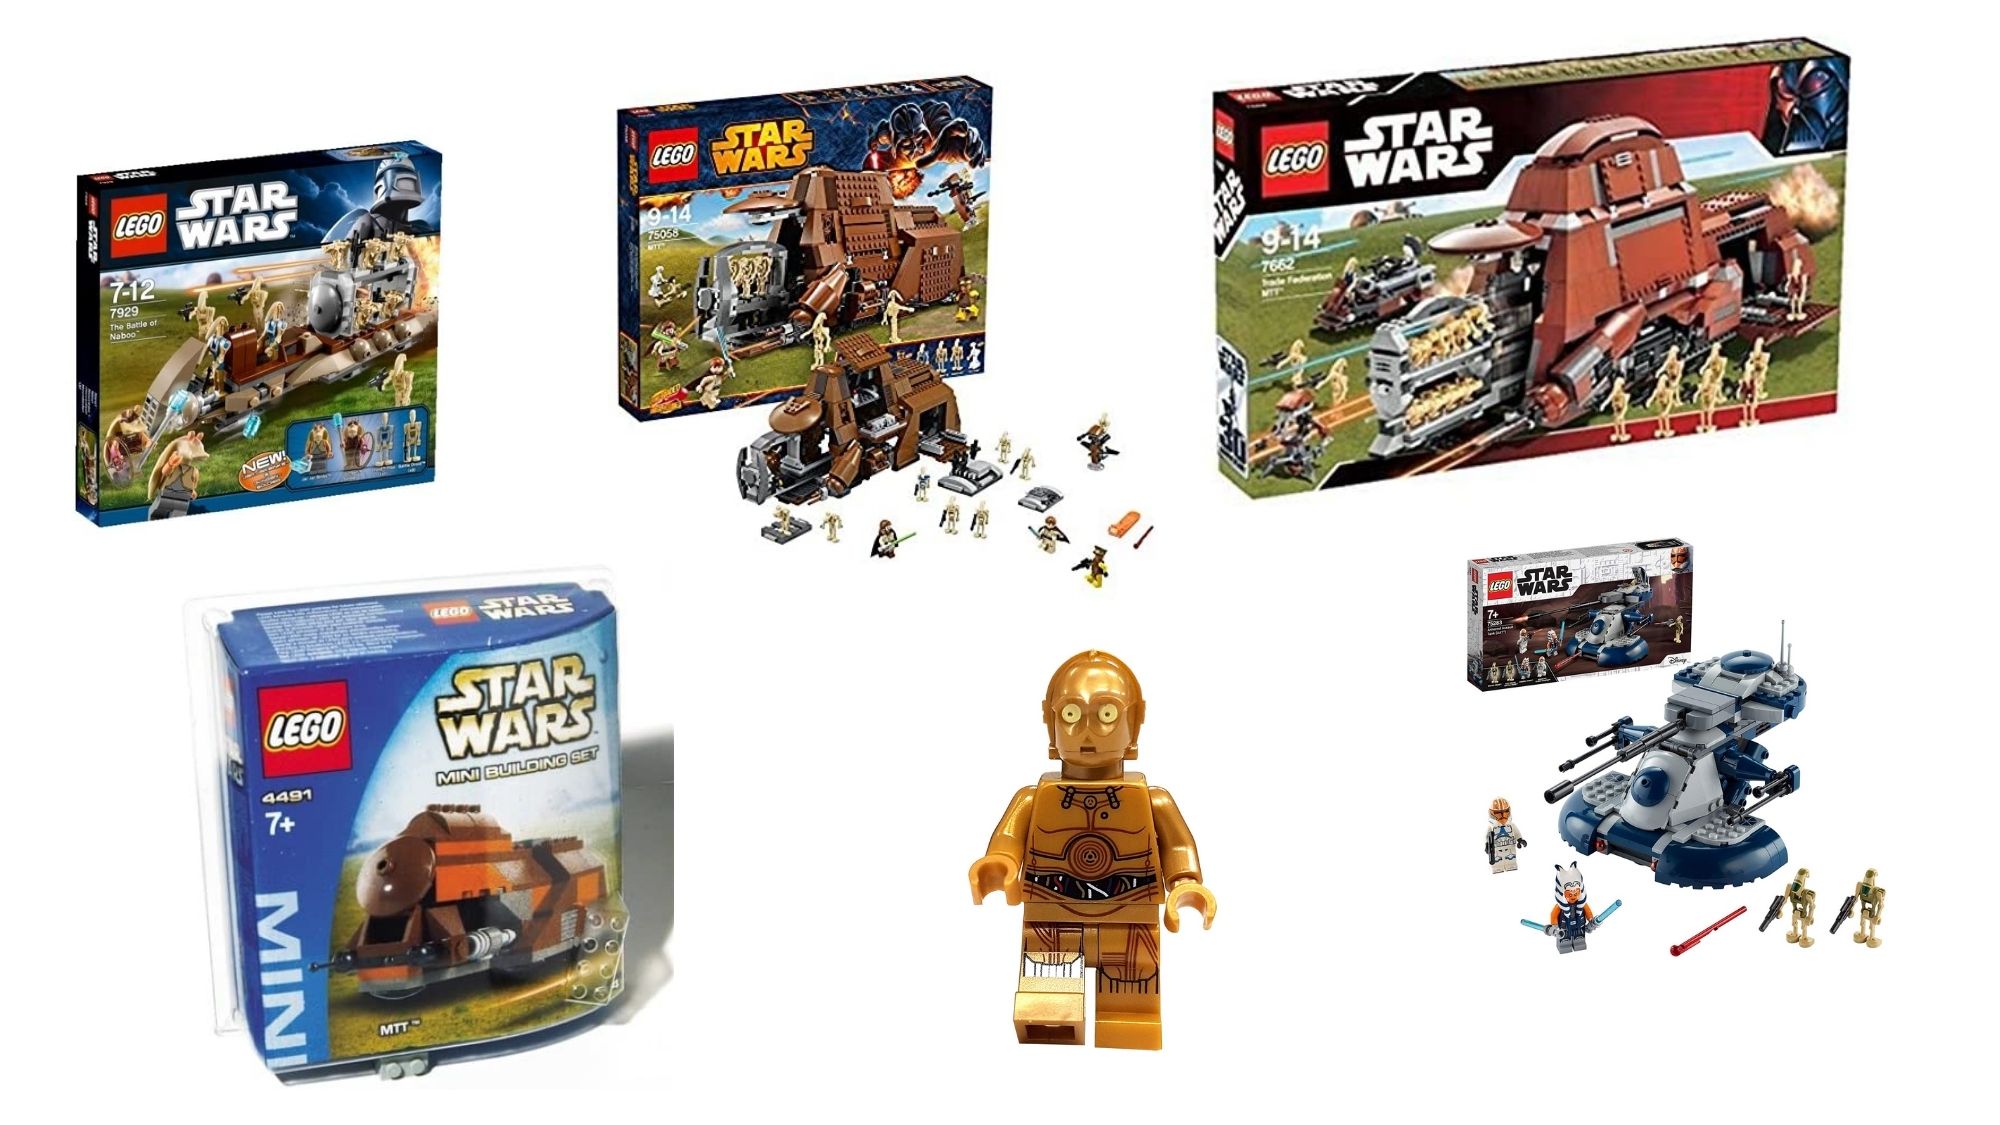 Spielzeug-Sets Neu 21 Stormtrooper-Minifiguren lego Star Wars kompatibel 